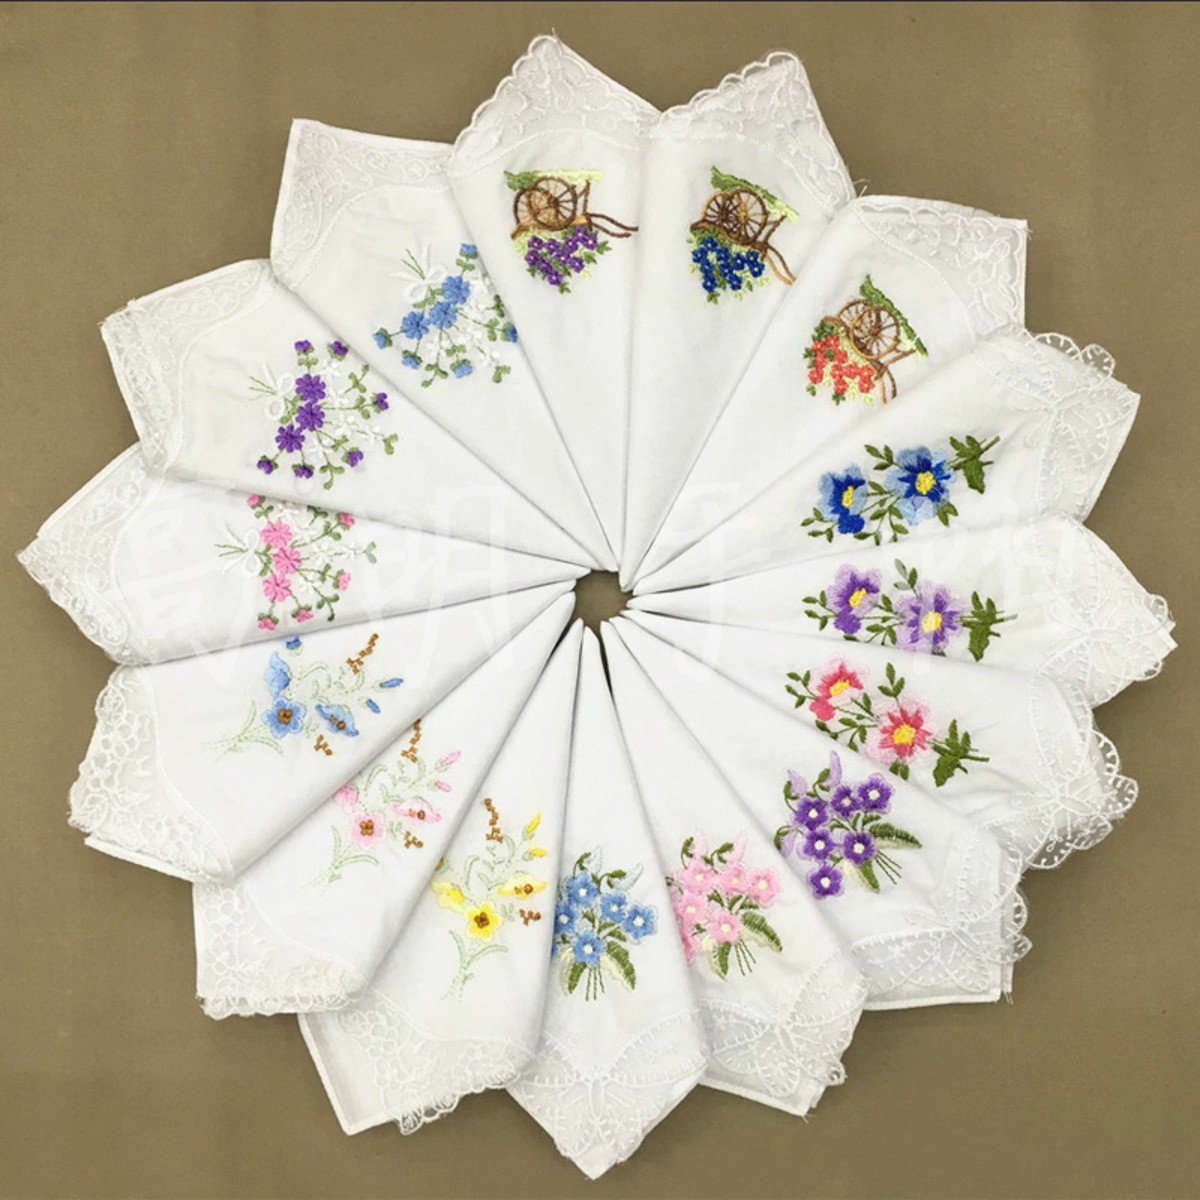 

6pcs Women Butterfly Flower Embroidery Cotton Lace Handkerchiefs Floral Assorted